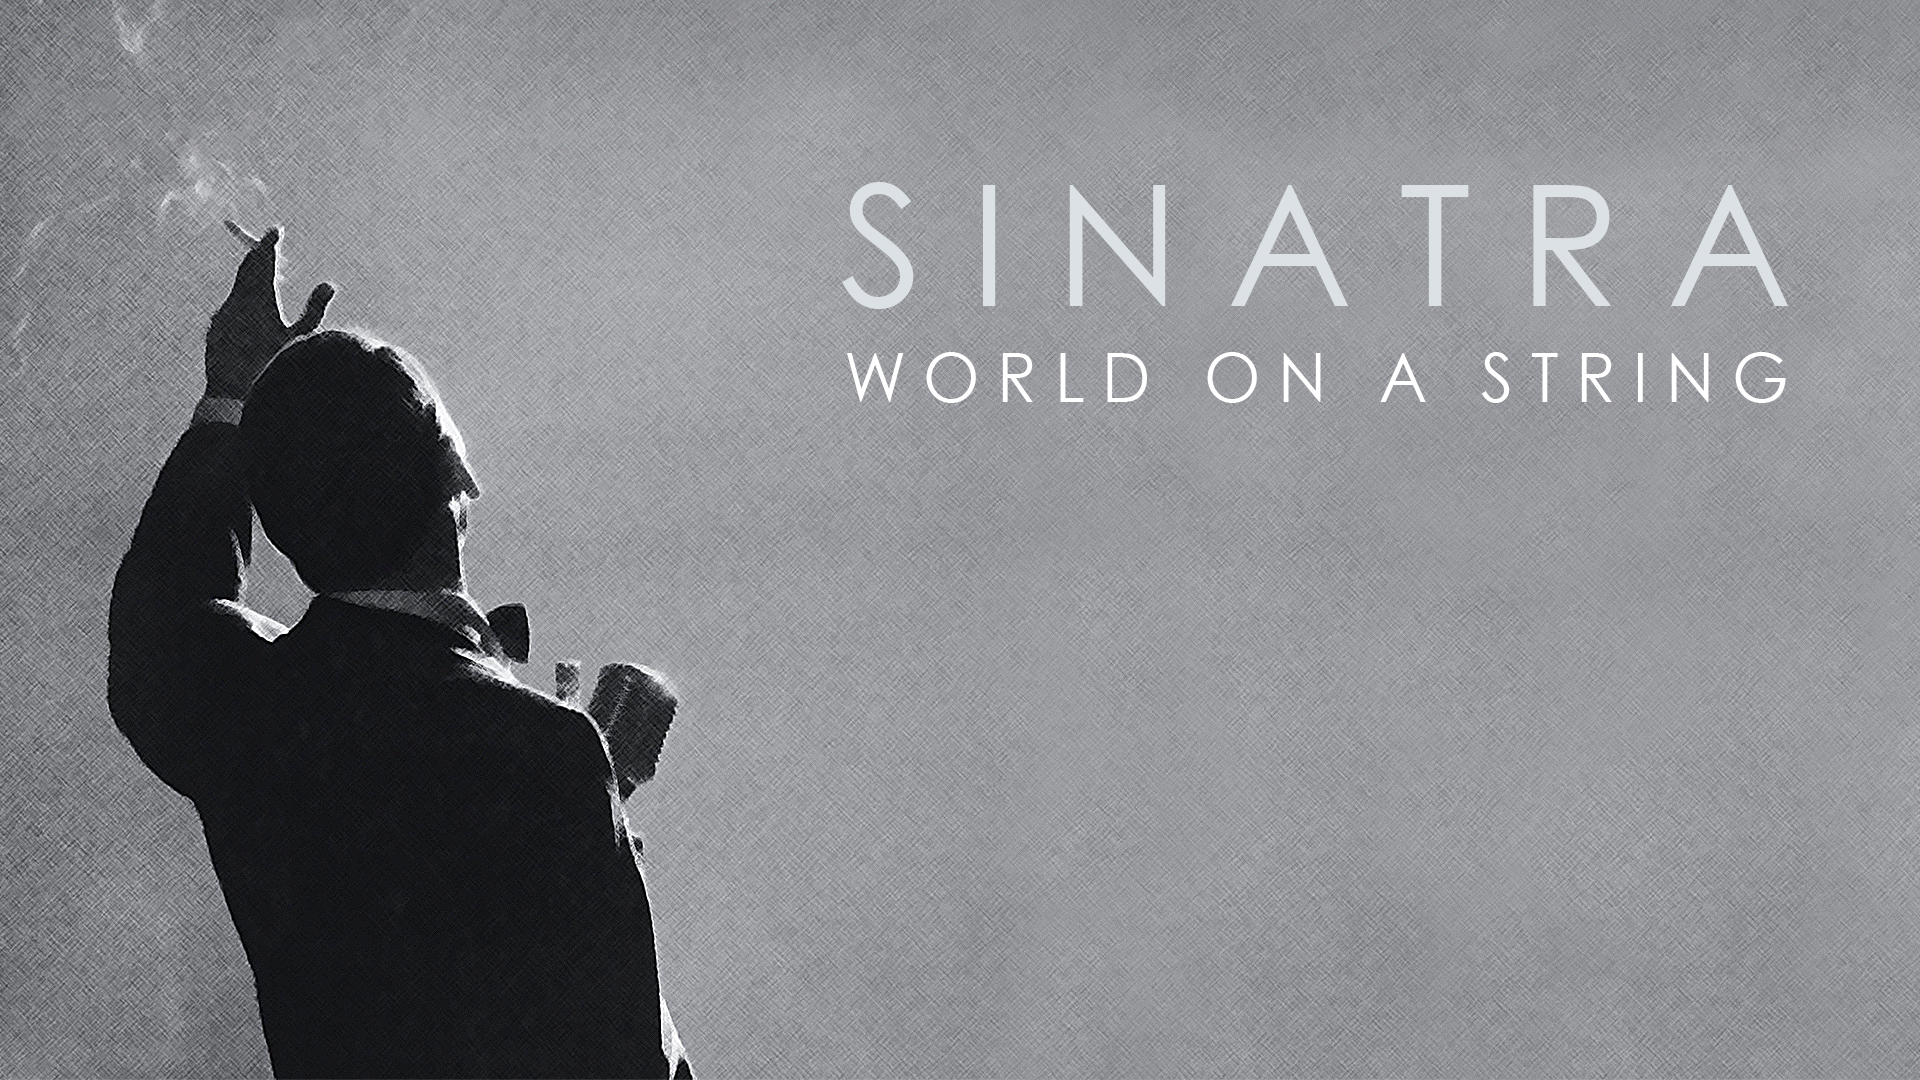 People 1920x1080 Frank Sinatra music suits tie legend actor men monochrome singer musician